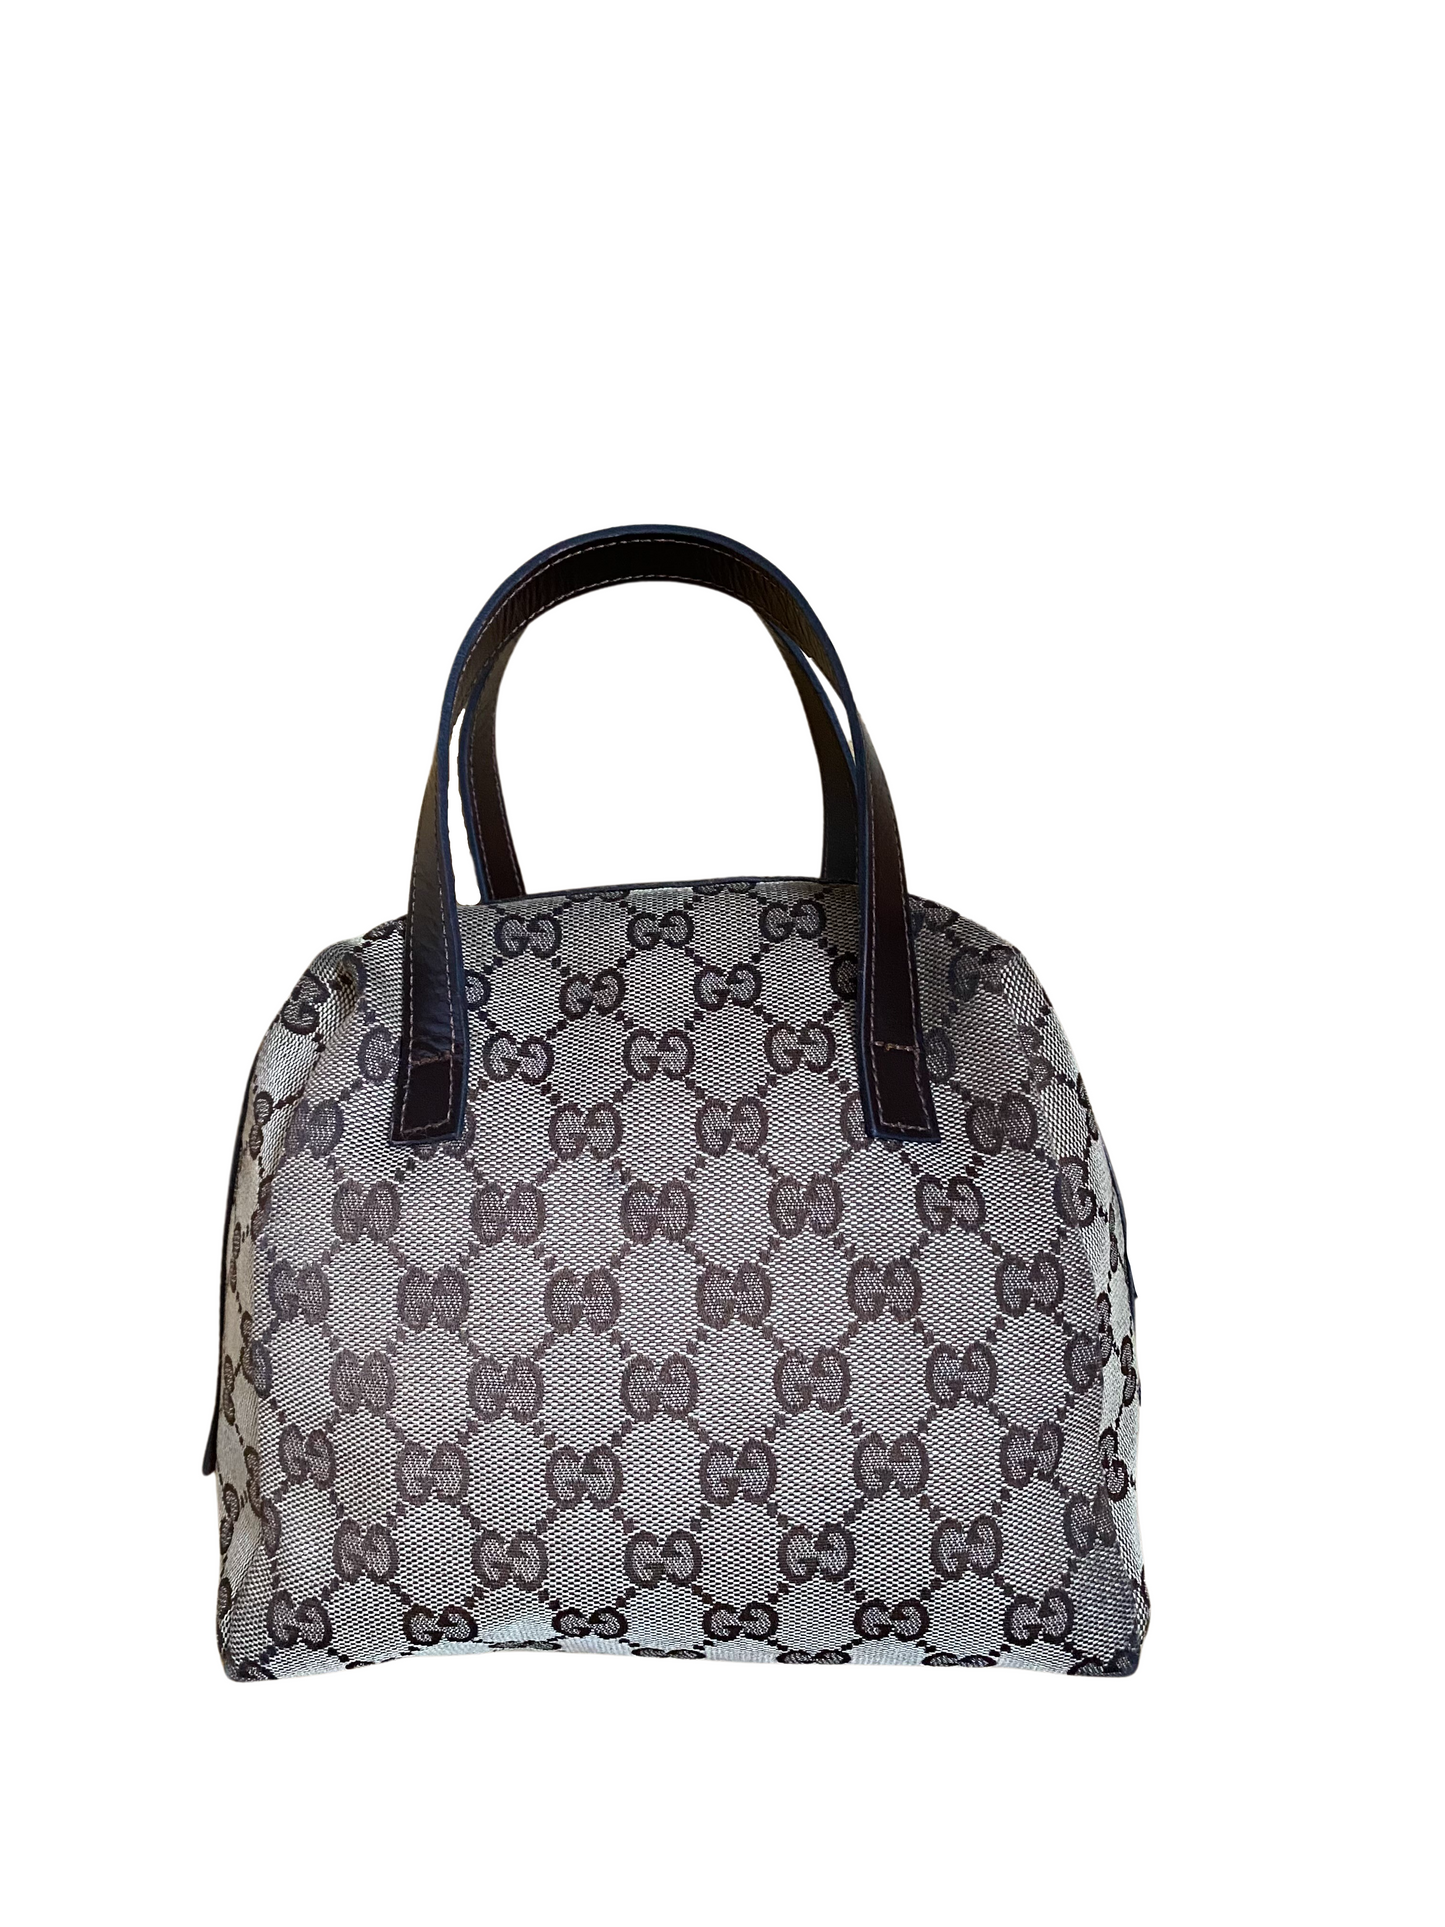 Gucci Beige & Dark Brown Jacquard & Leather Bag